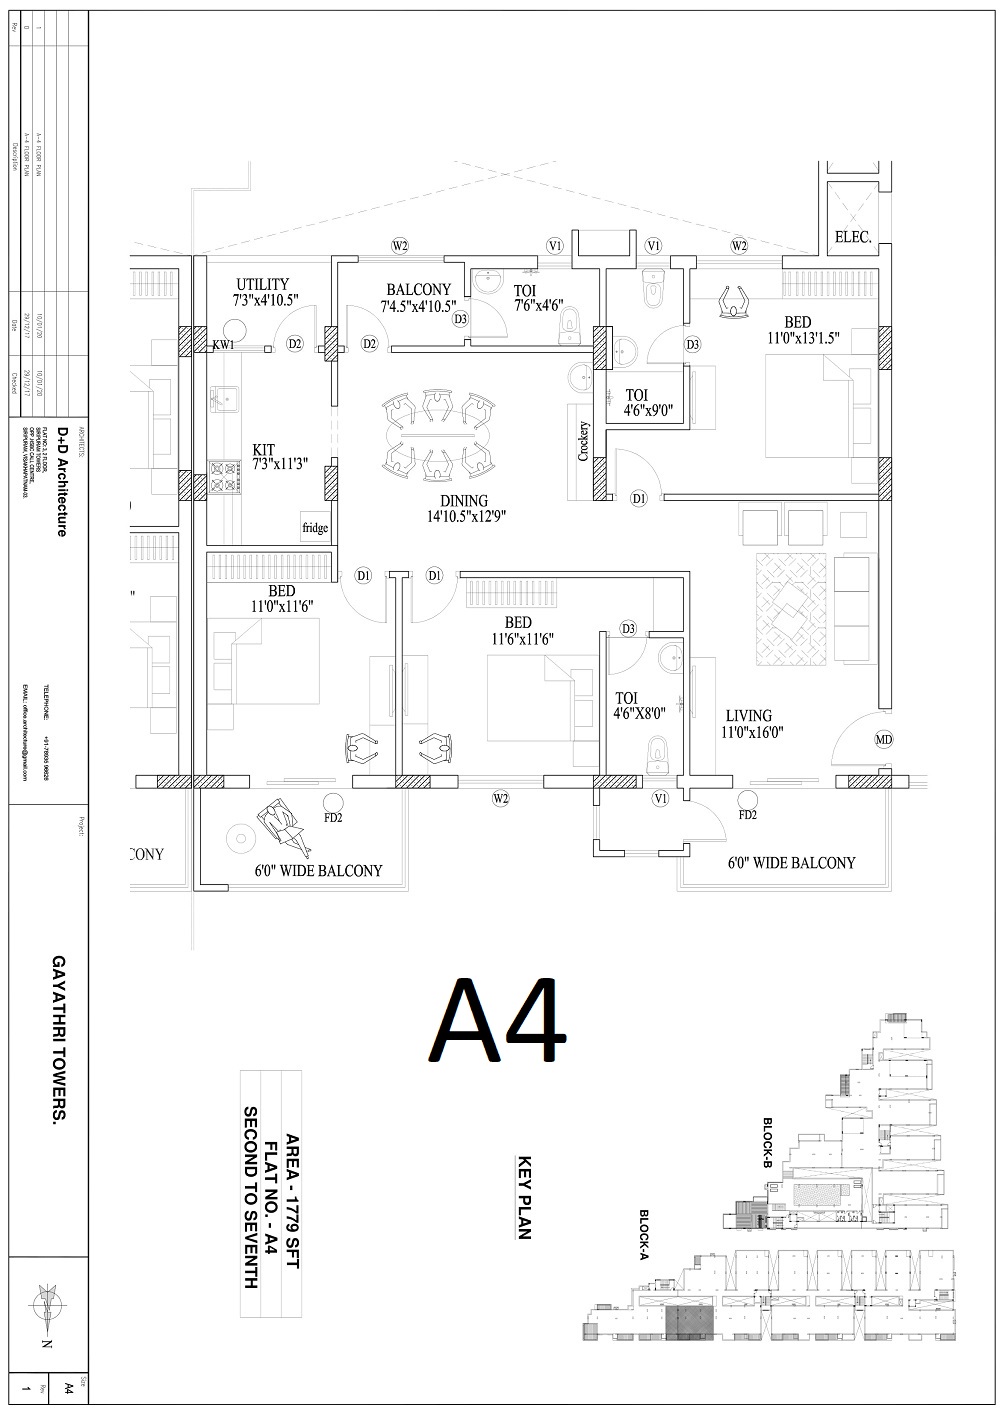 A4 - Tipcal Floor Plan